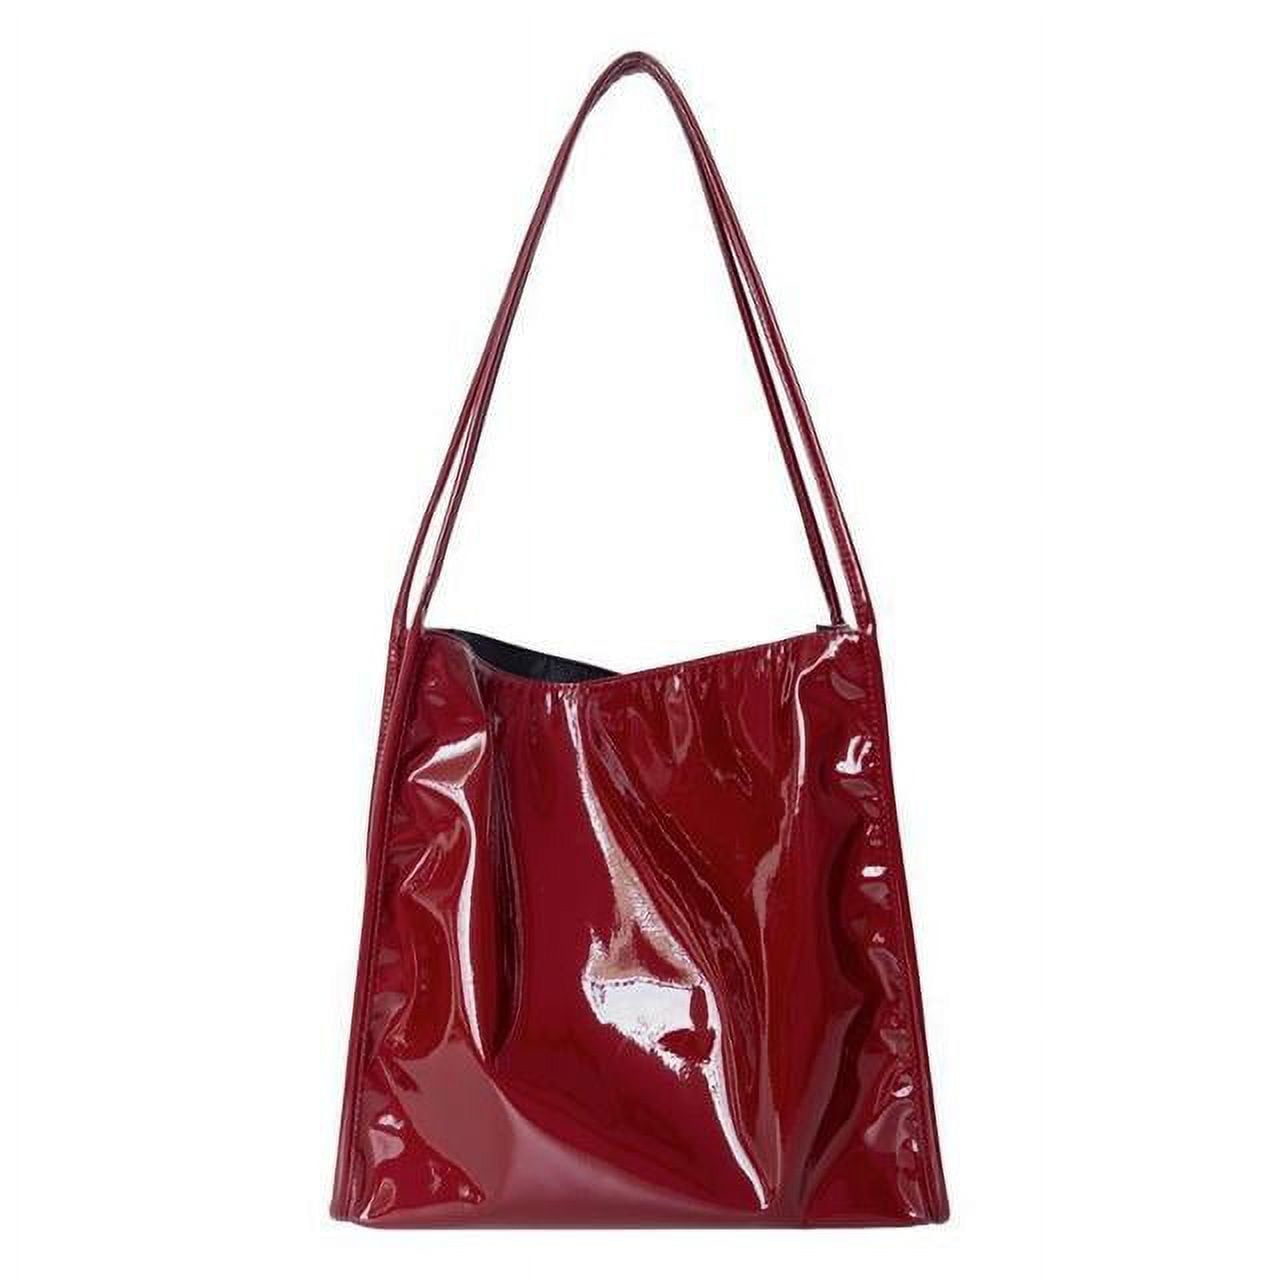 Vintage Bag Red Patent Leather Women's Shoulder Bag Fashion Ladies